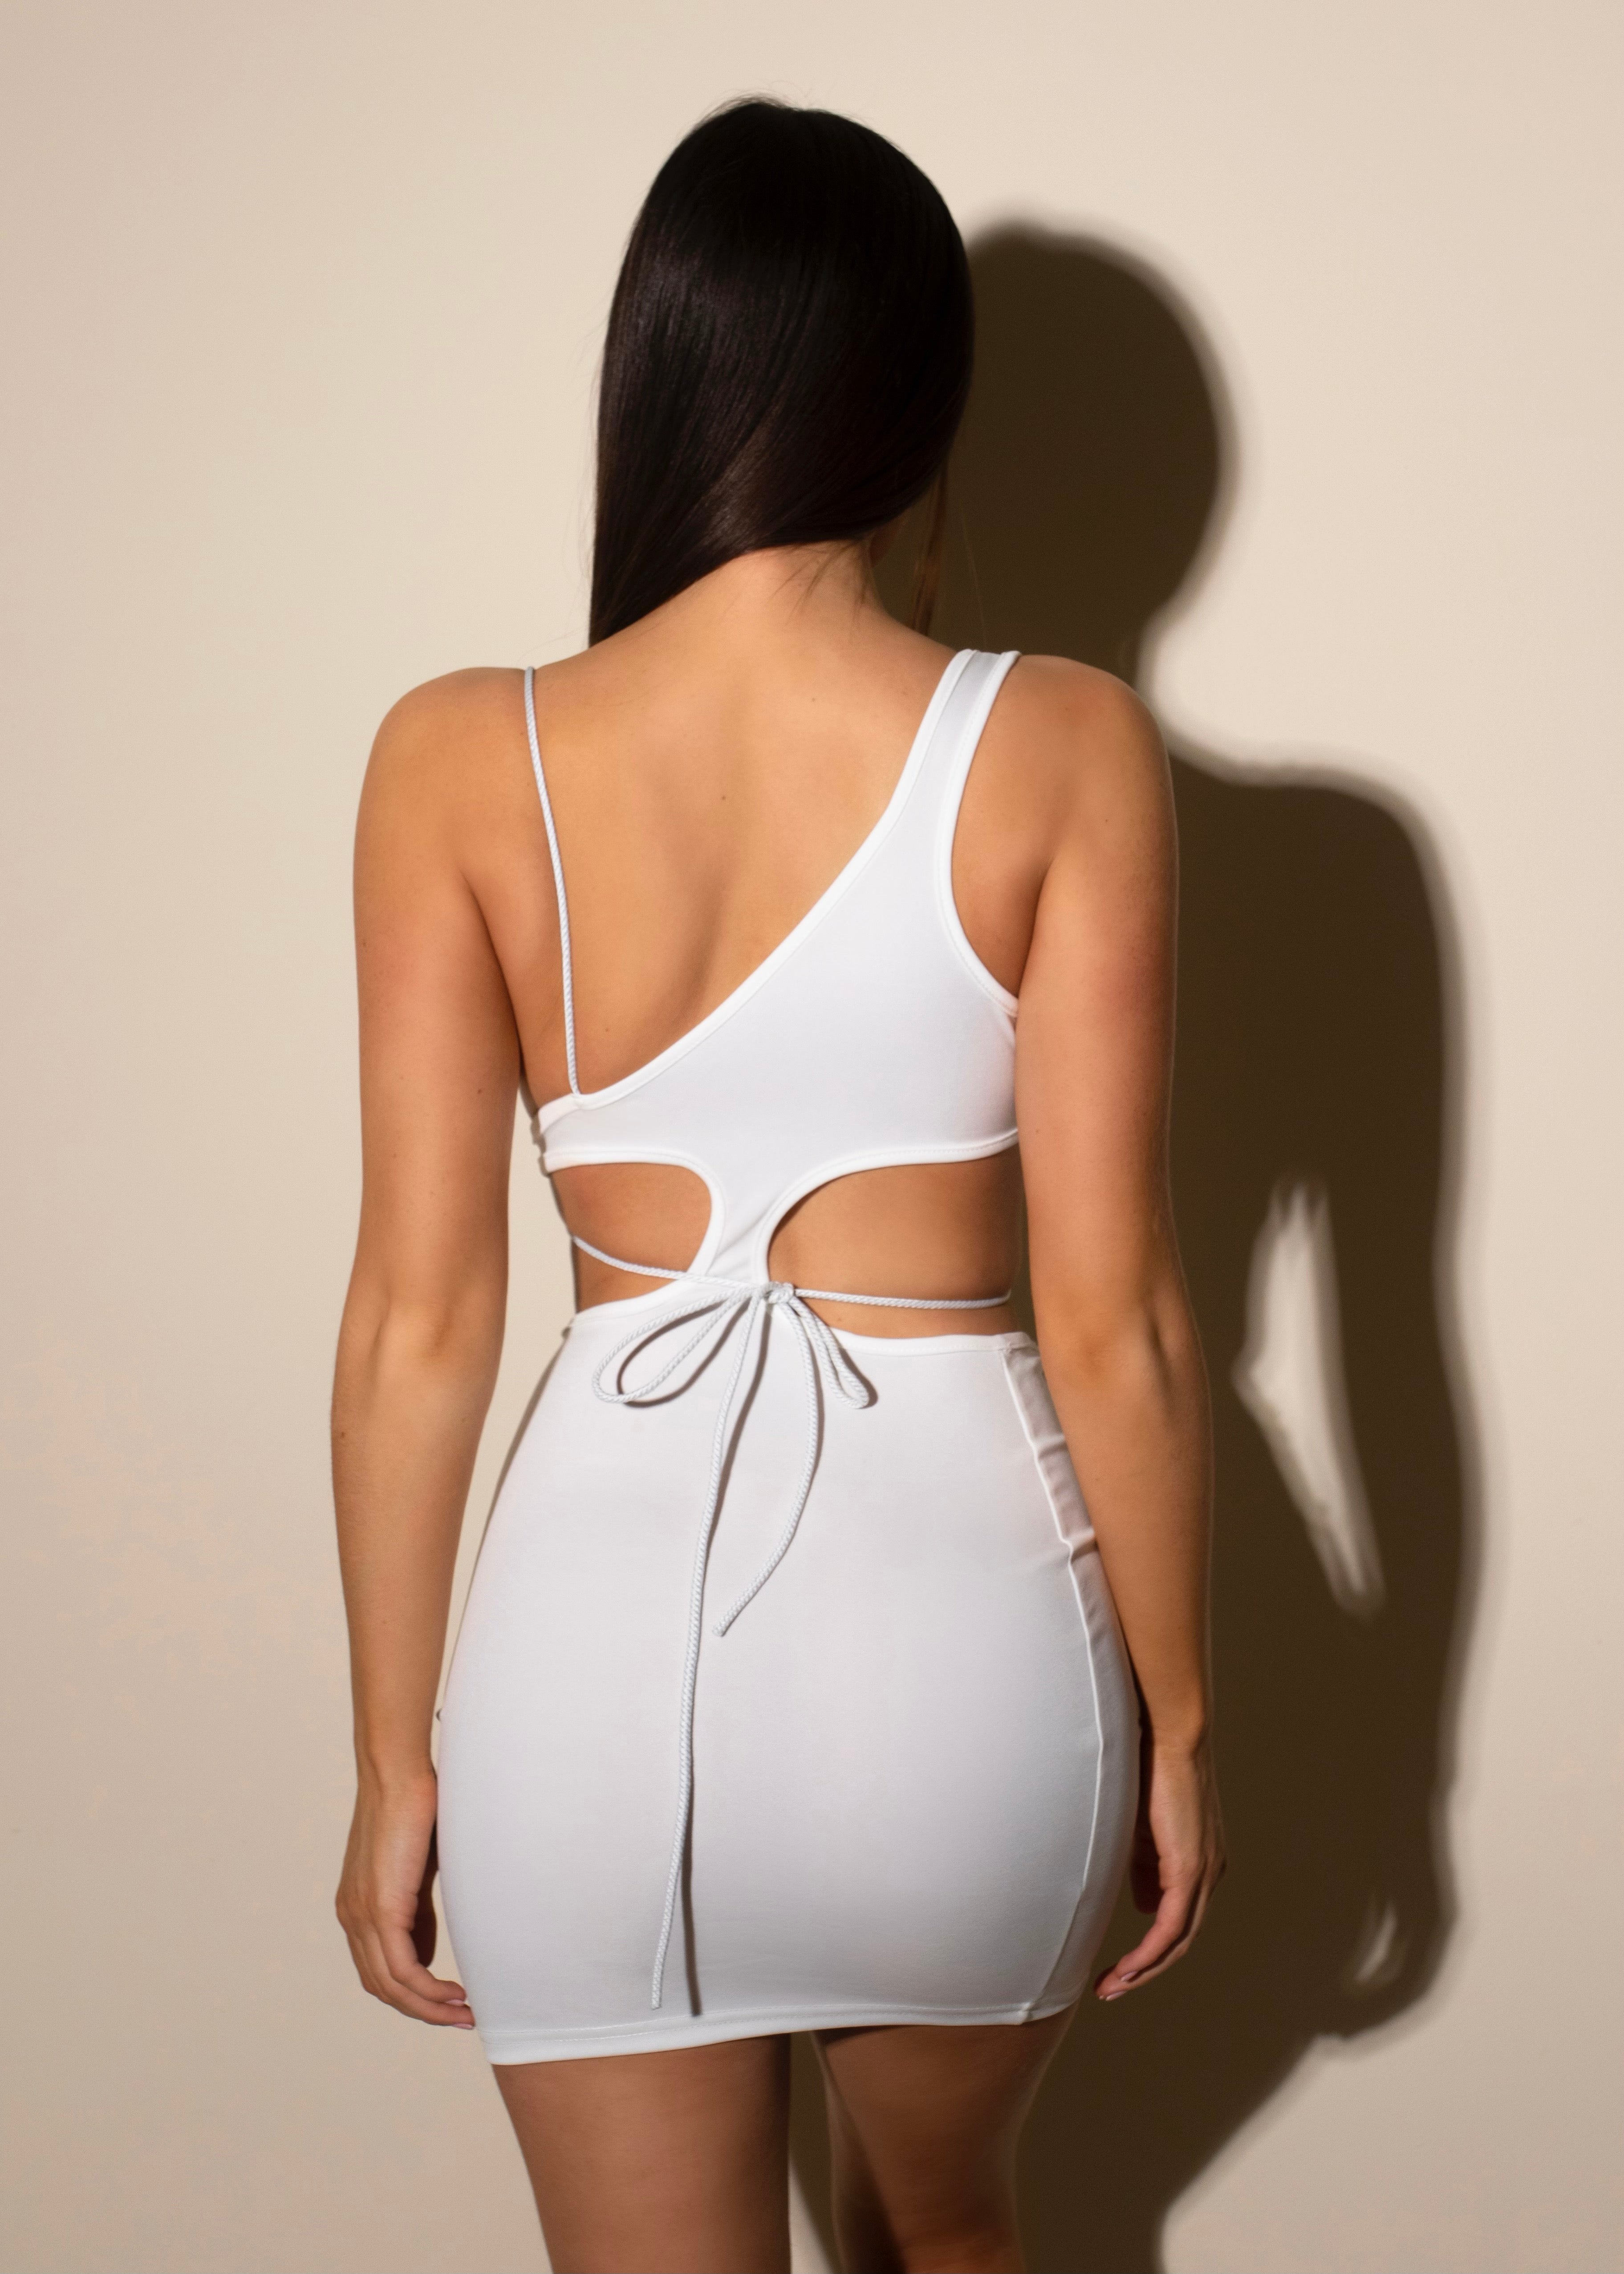 ARIANA - White Strappy Bodycon Dress - SALE